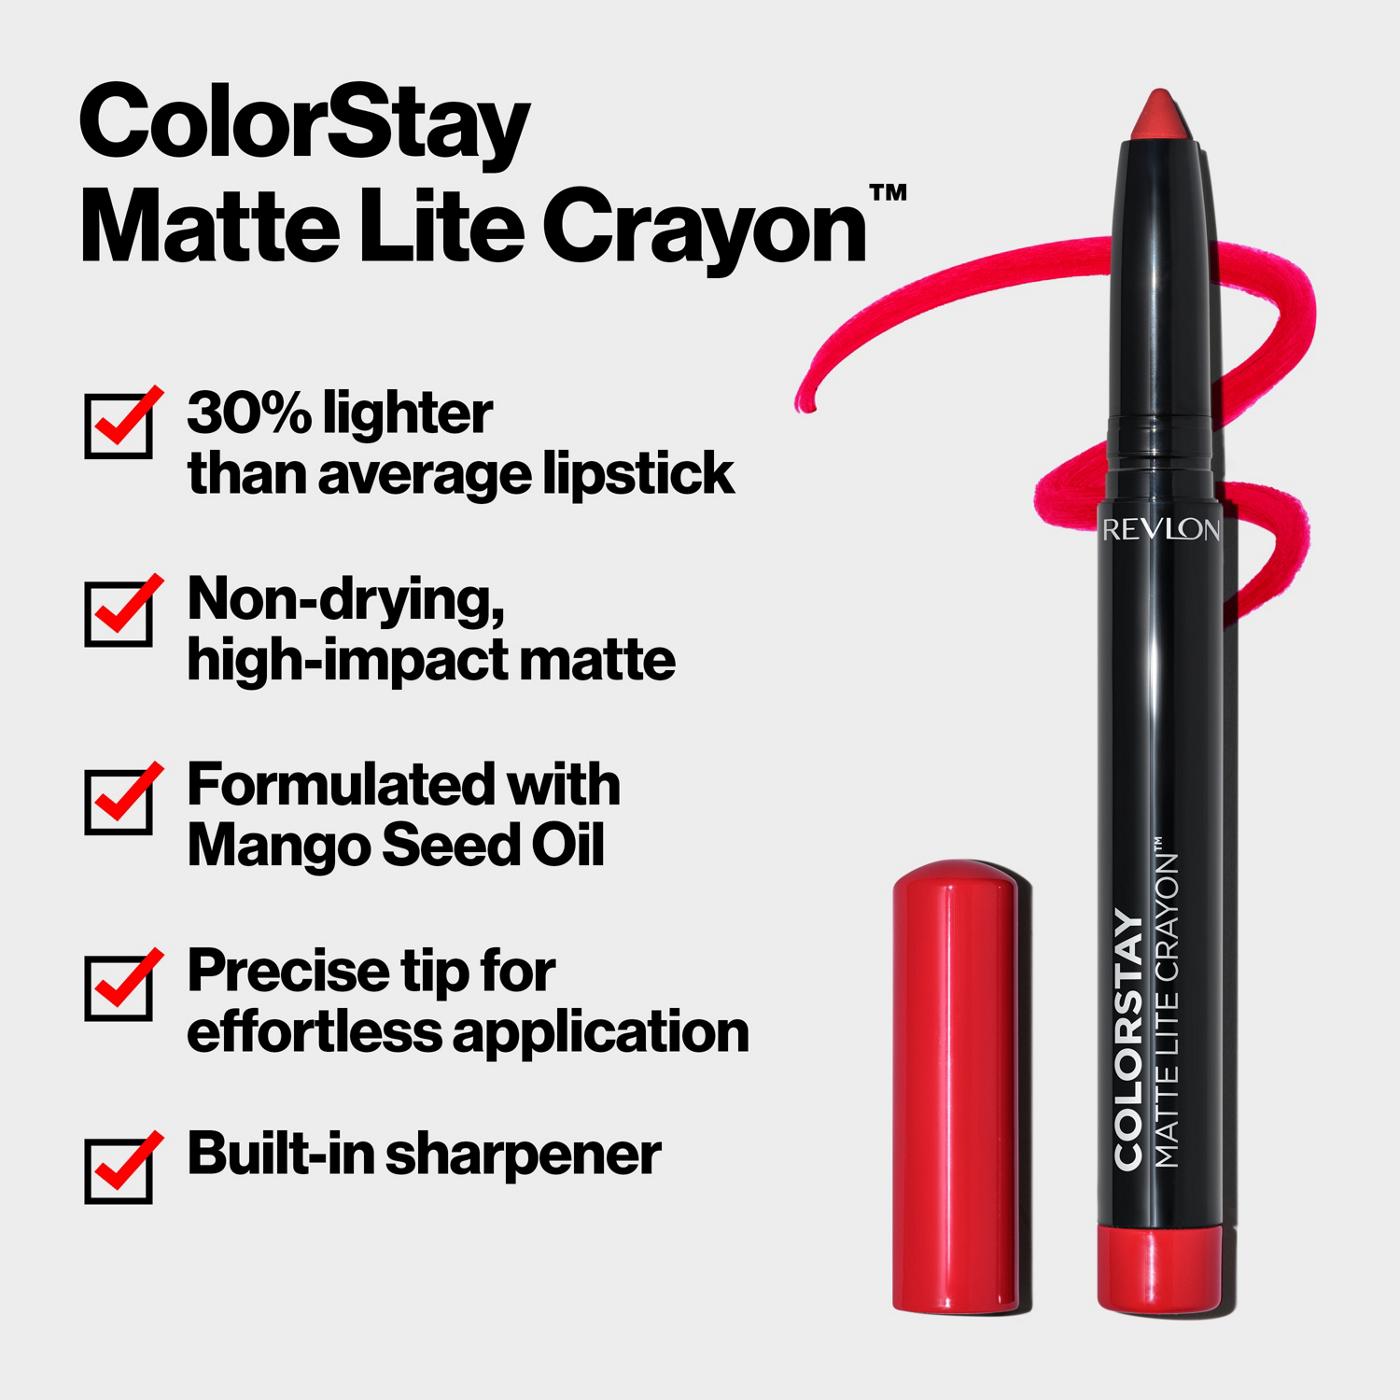 Revlon ColorStay Matte Lite Crayon Lipstick - Air Kiss; image 7 of 7